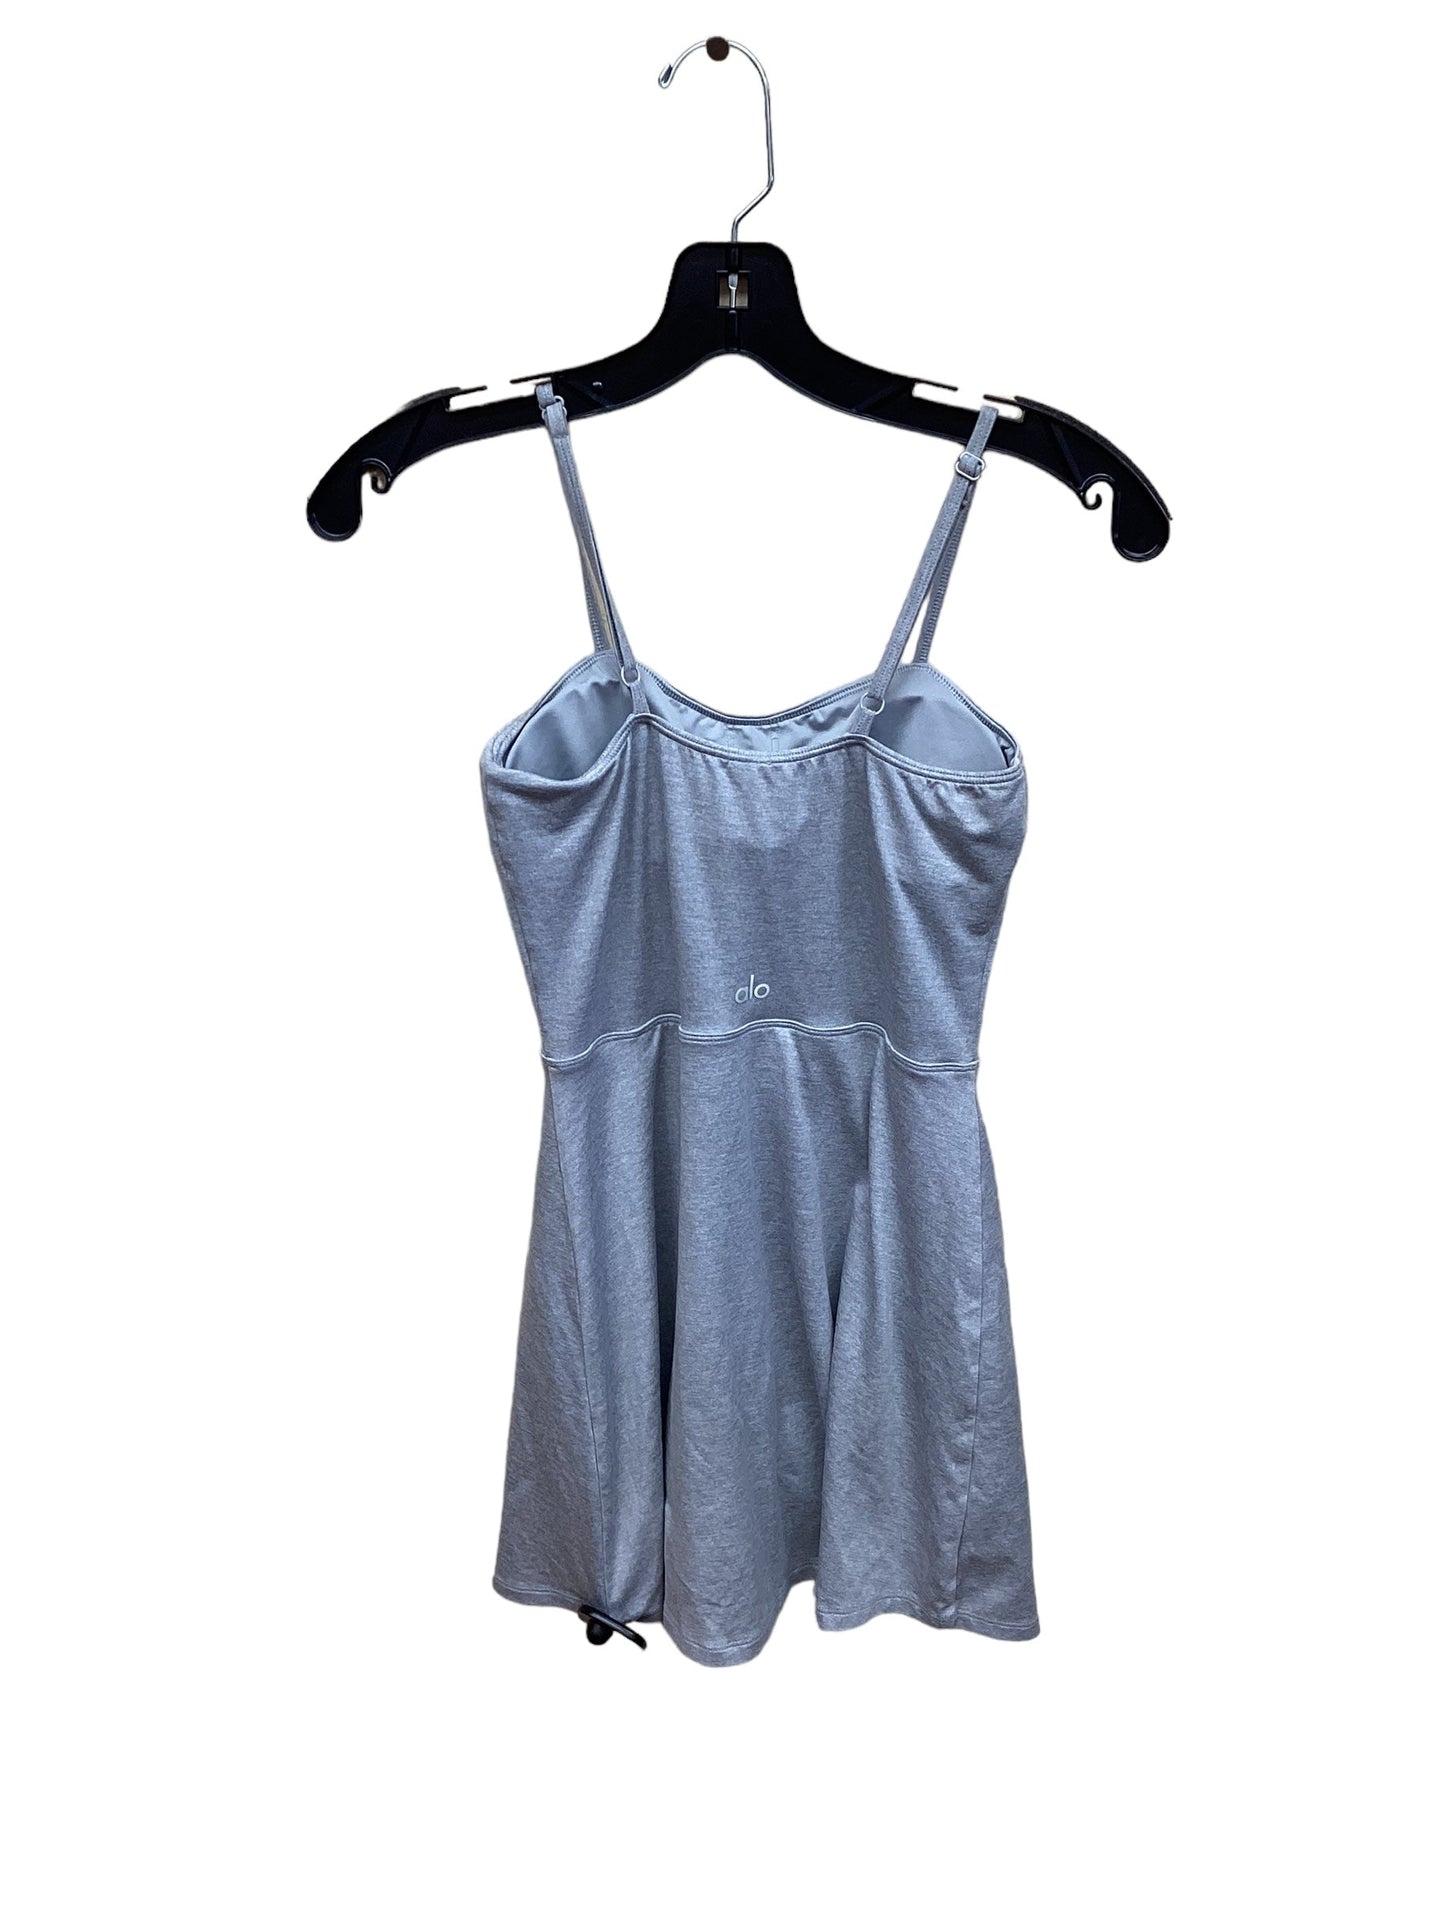 Grey Athletic Dress Alo, Size S